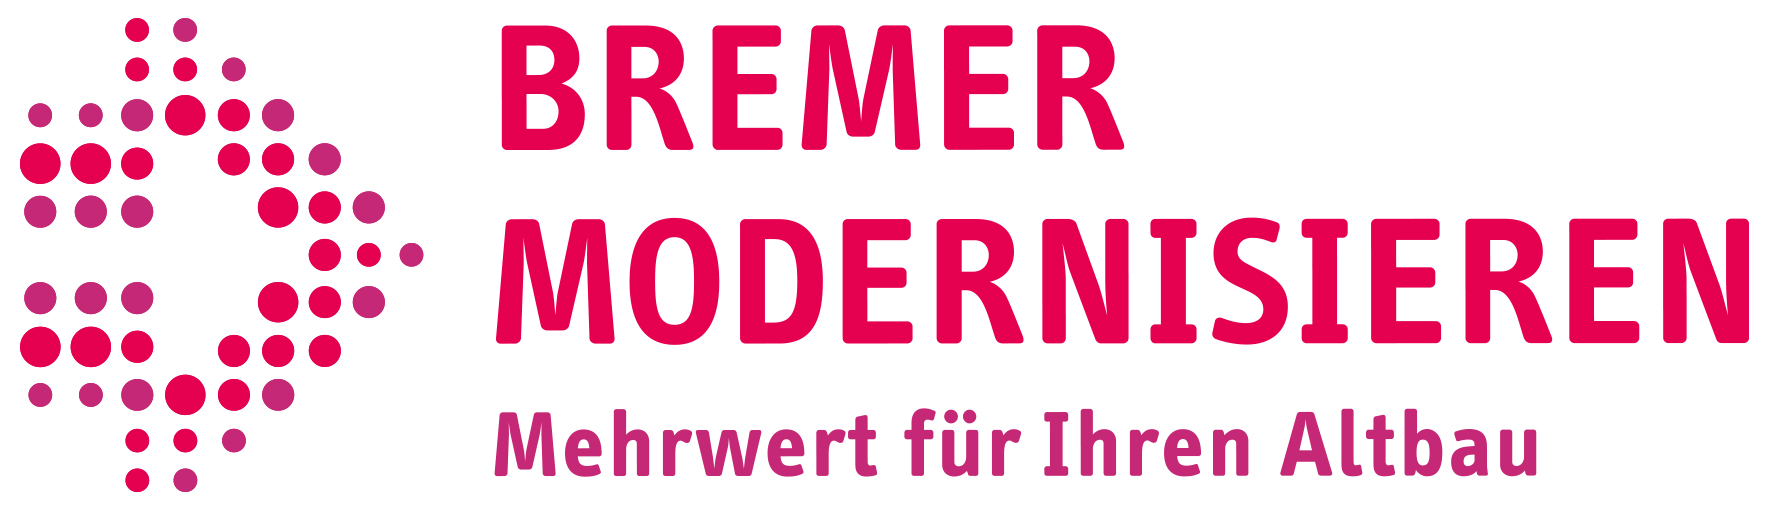 Bremer Modernisieren